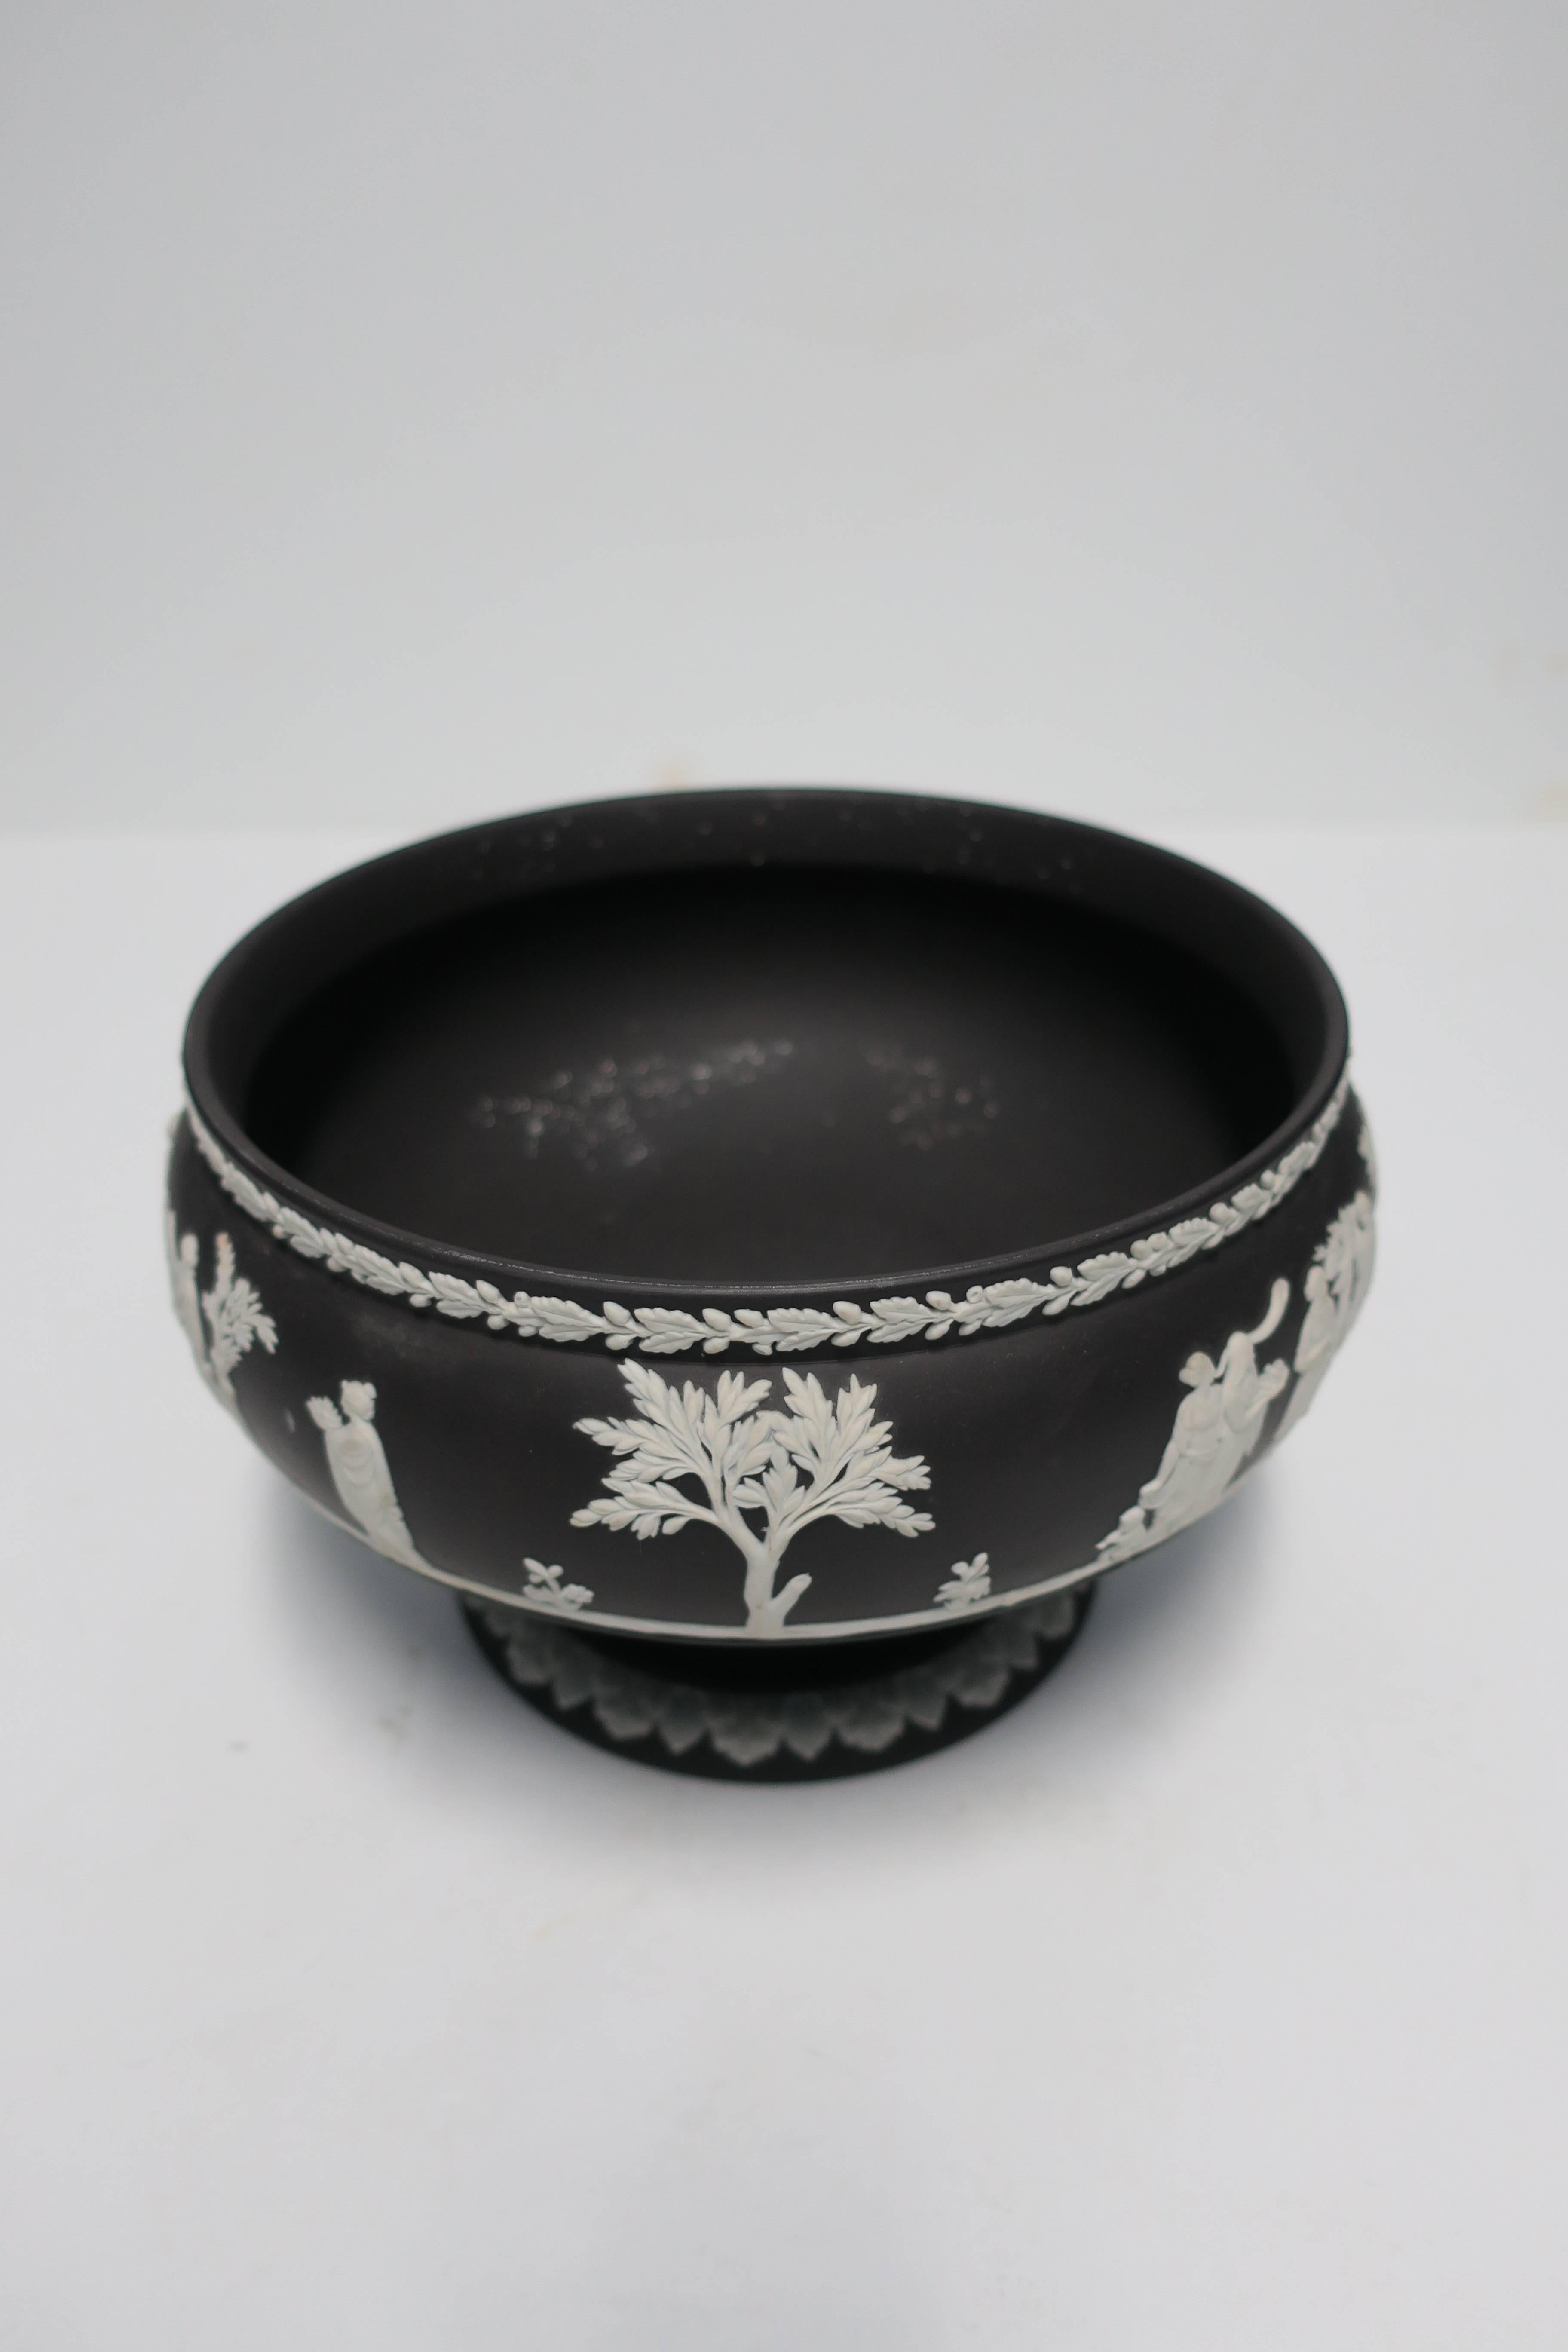 Pottery Black and White Basalt Wedgwood Jasperware Urn or Centerpiece Bowl